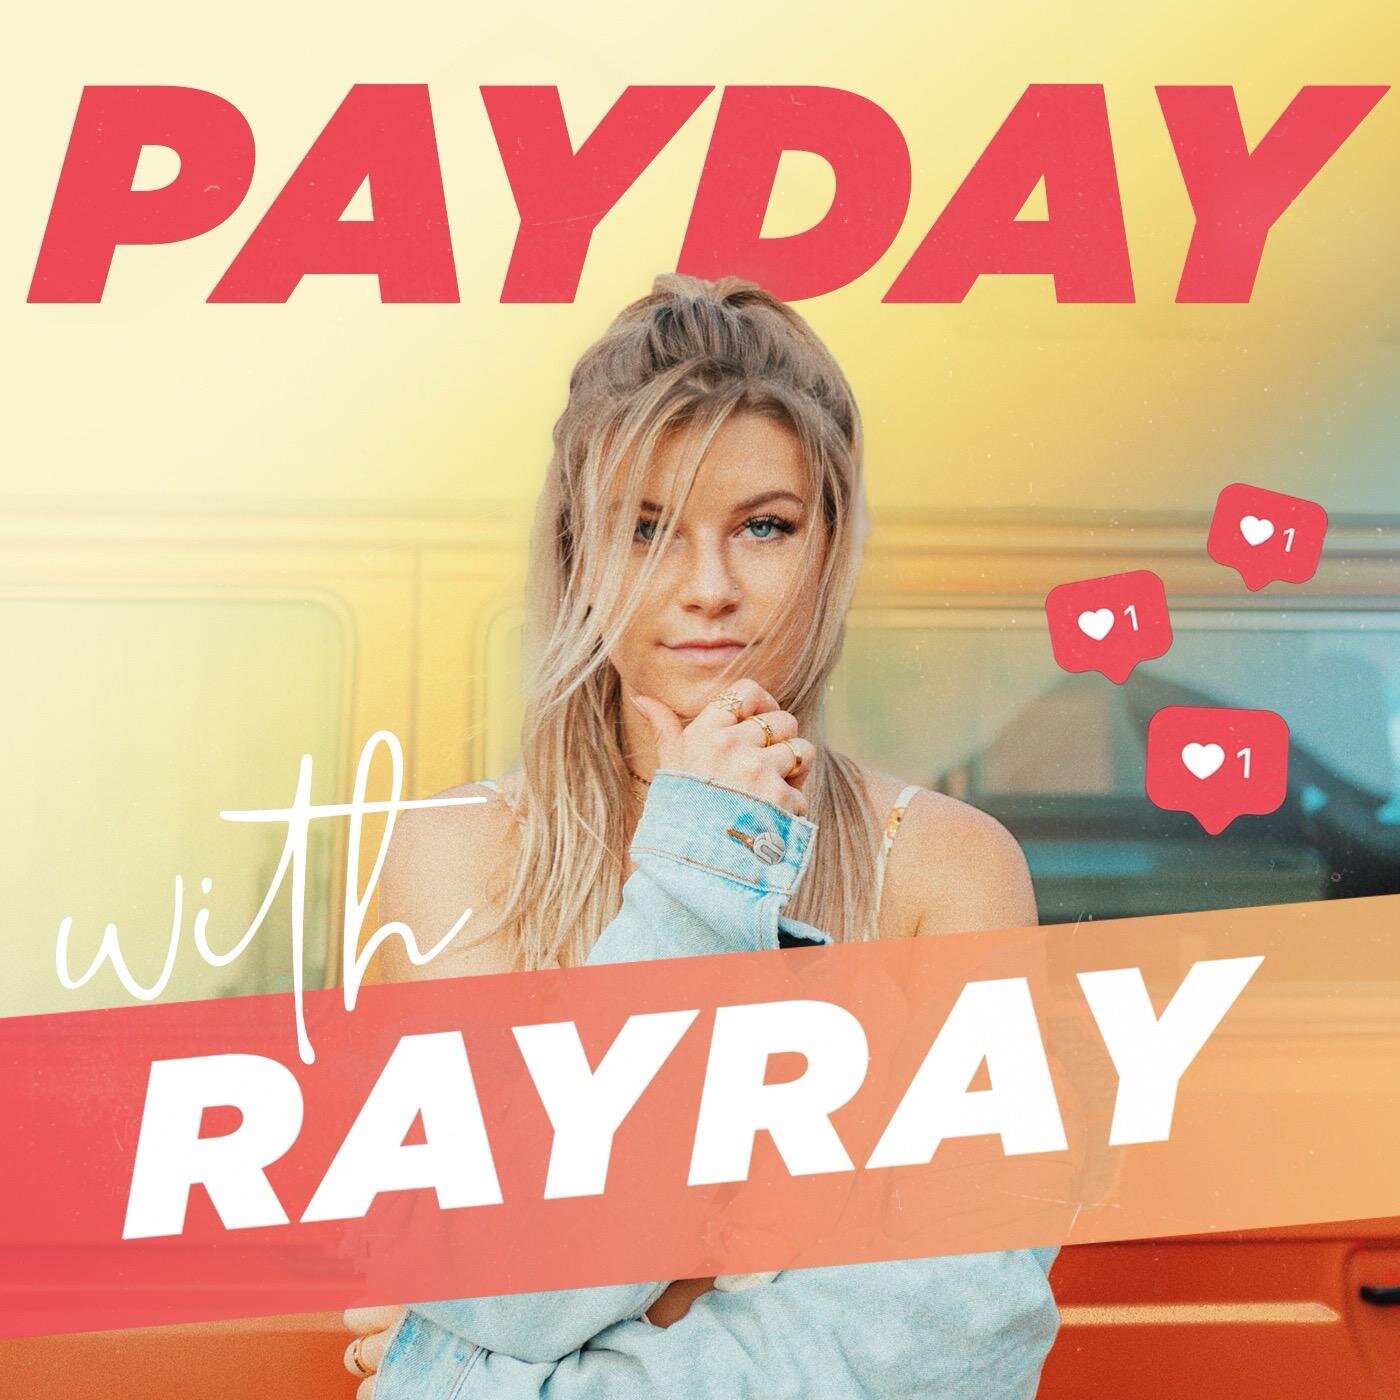 payday-with-rayray-X0D4NTALV7a-nDxha9124GP.1400x1400.jpg